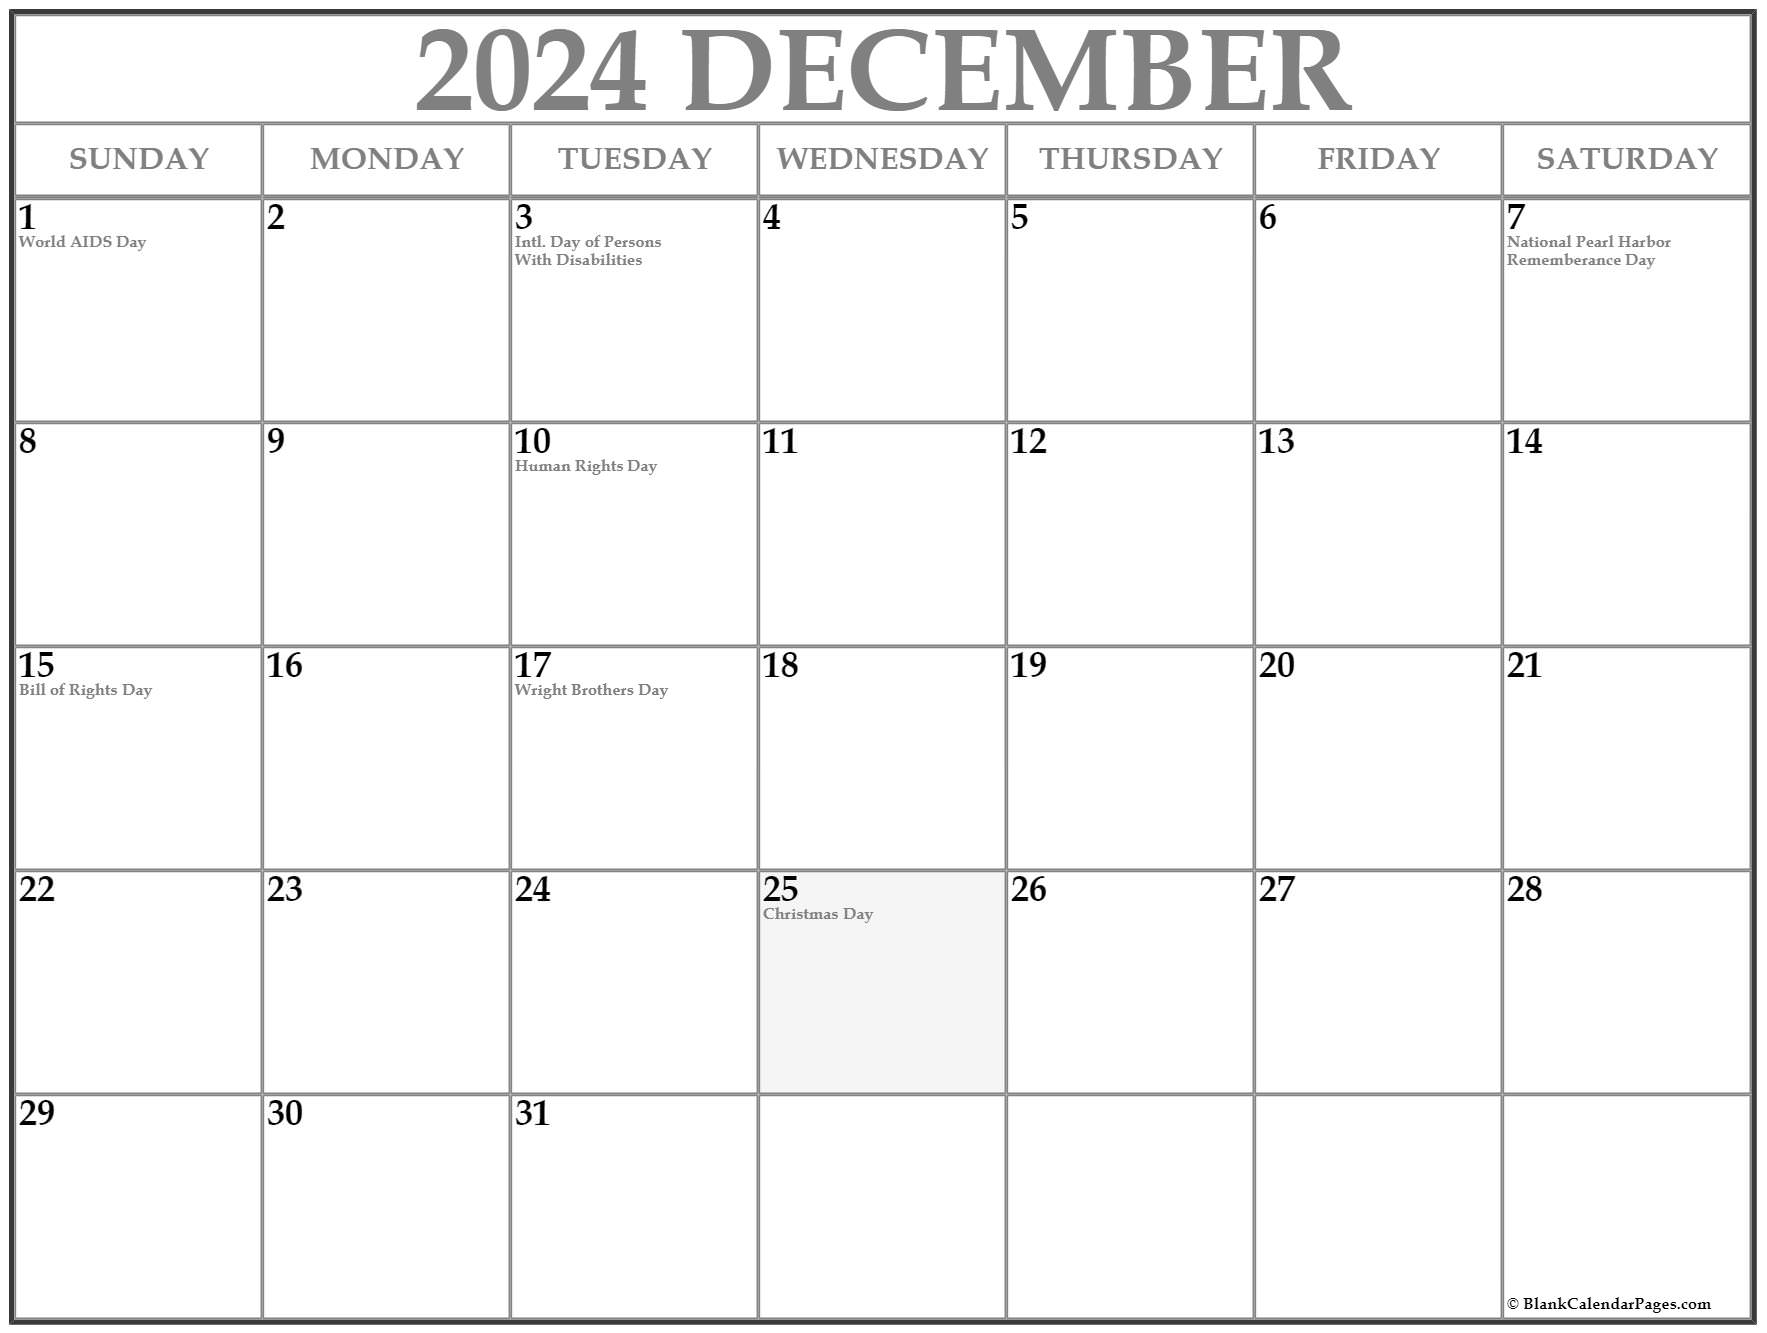 December 2019 calendar with holidays